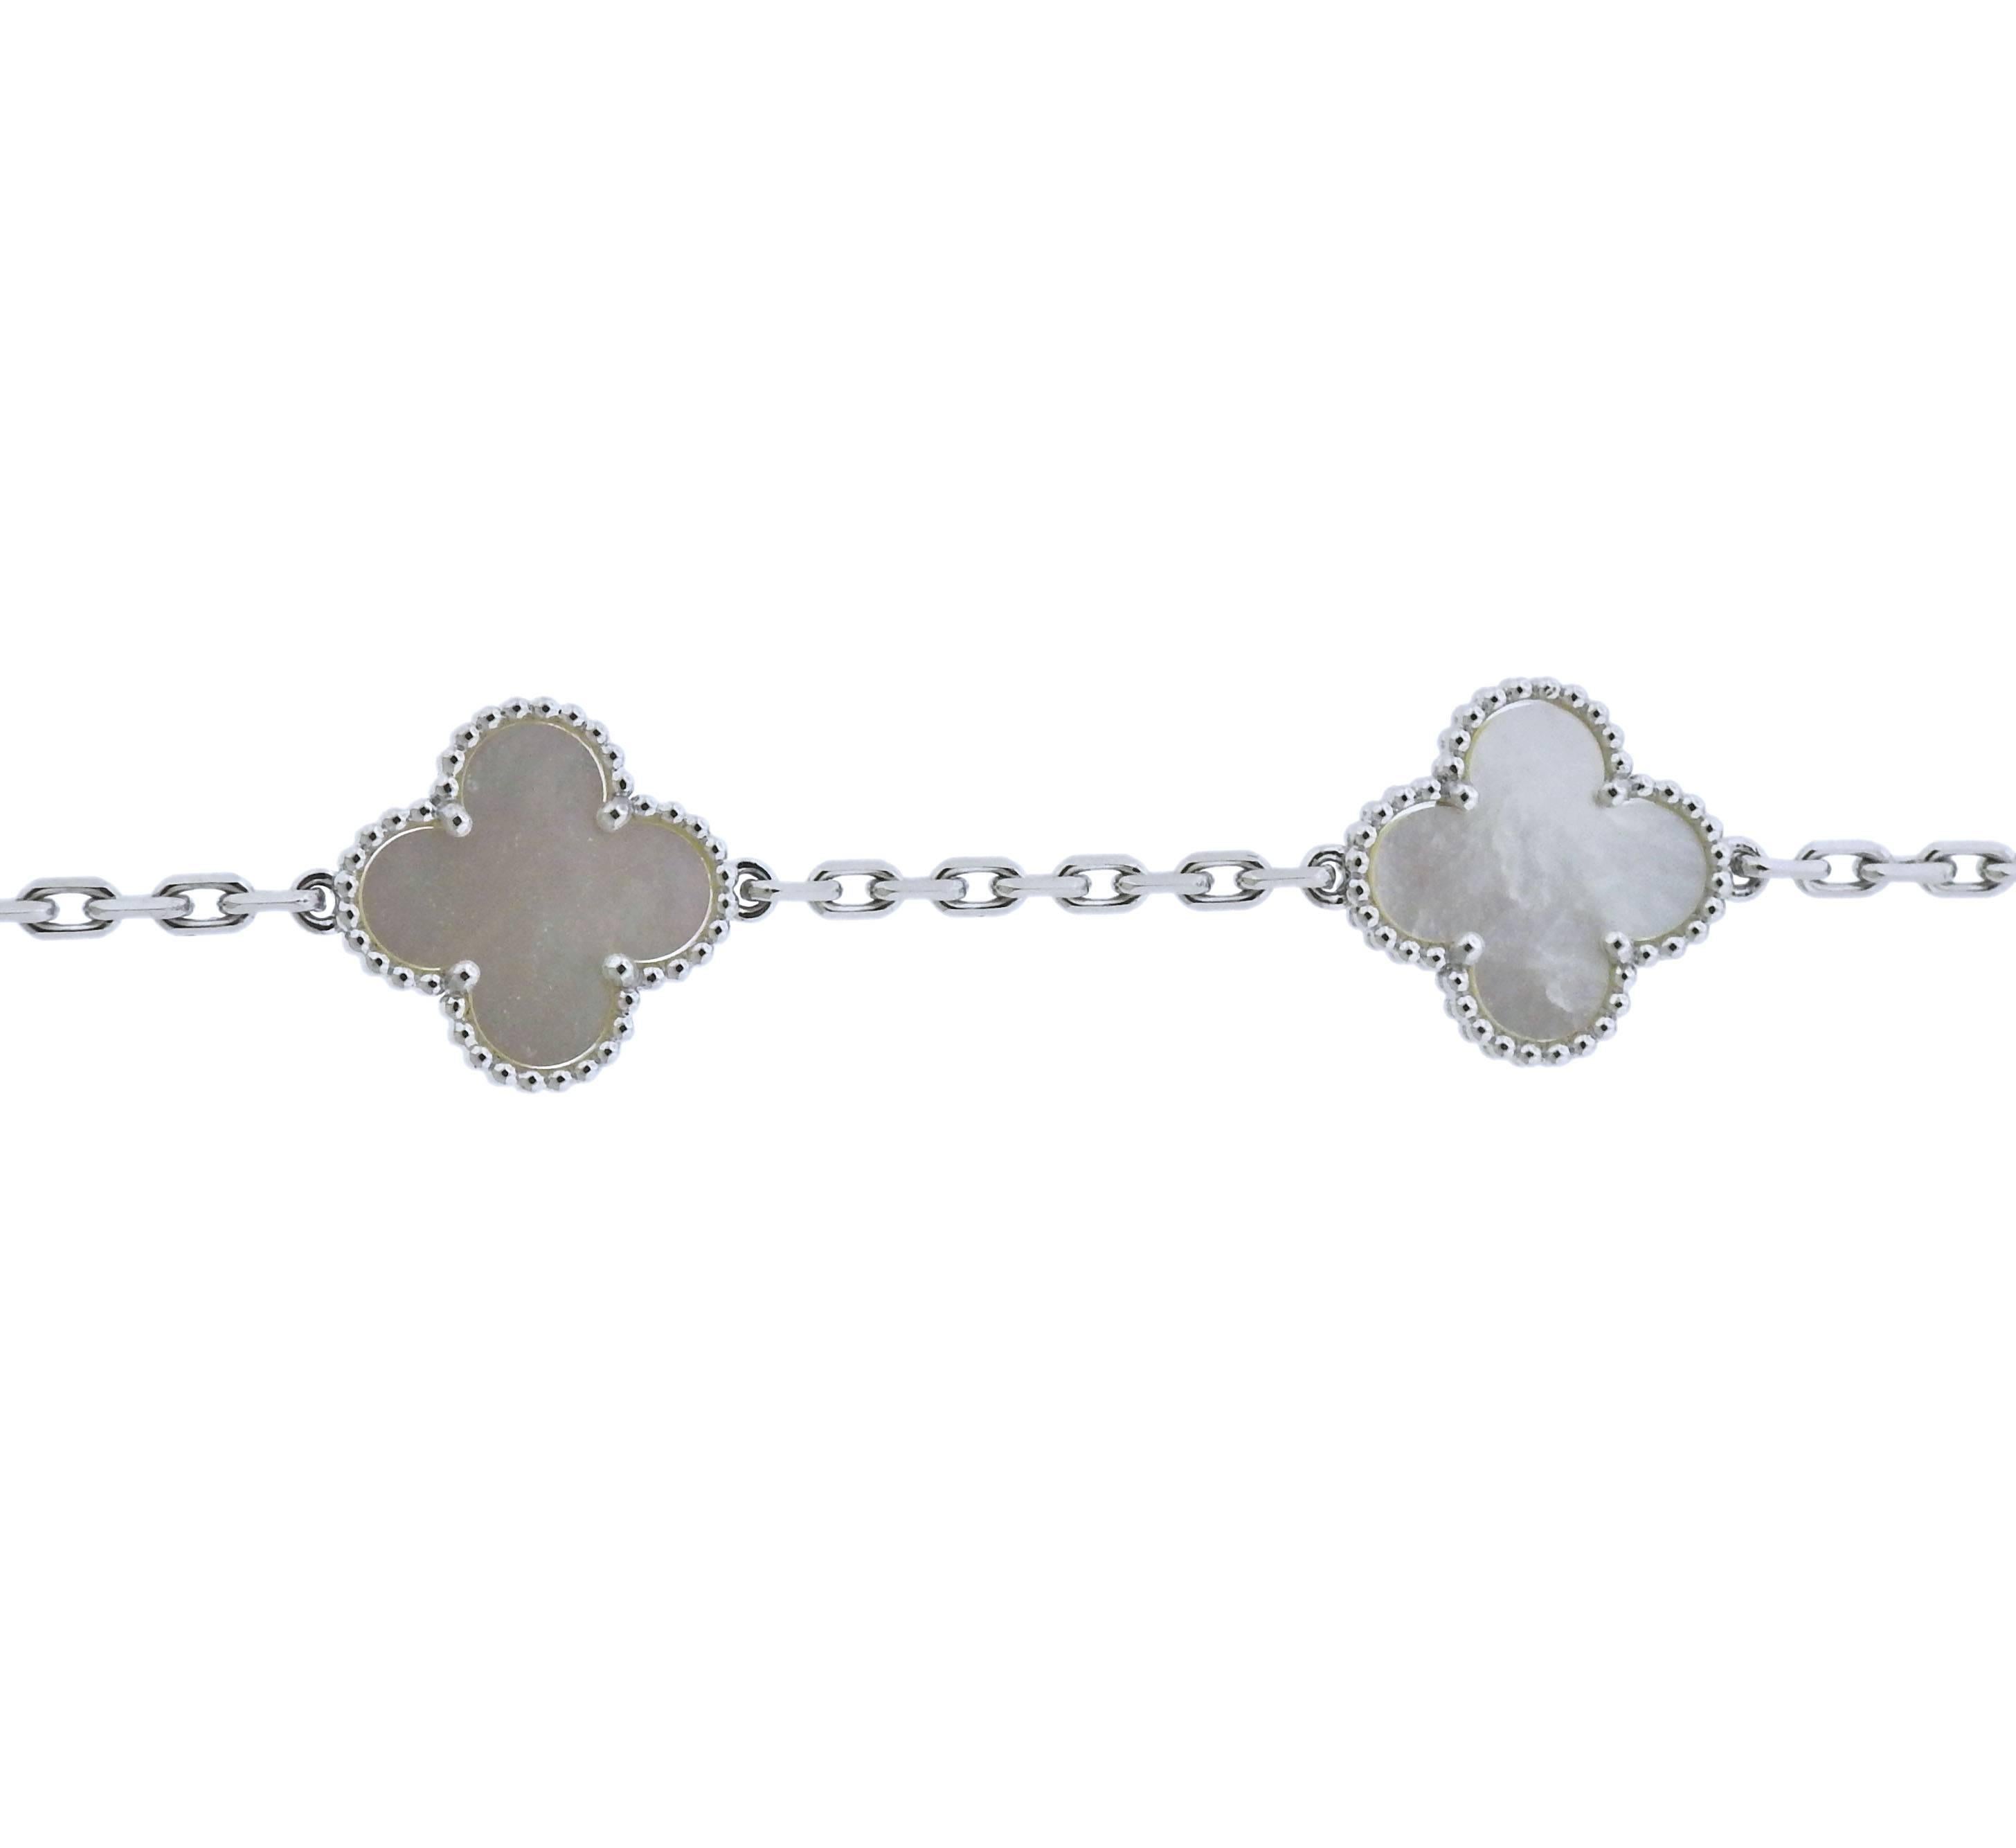  18k white gold five motif Vintage Alhambra bracelet by Van Cleef & Arpels. Retail $4150. Comes with VCA Box and COA. Bracelet is 7.5